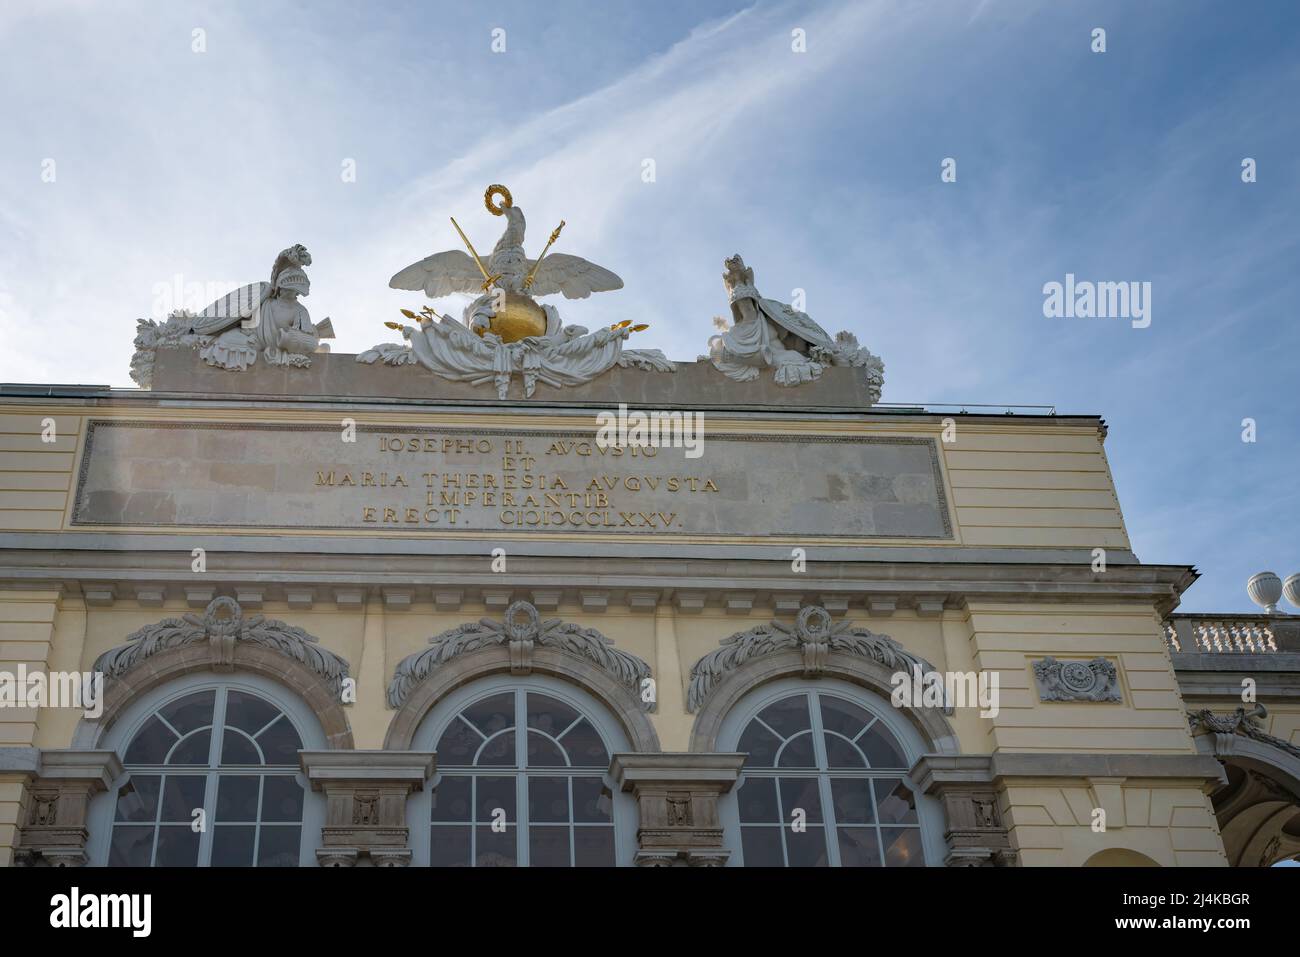 Gloriette en el Palacio de Schonbrunn - por Johann Ferdinand Hetzendorf von Hohenberg - Viena, Austria Foto de stock